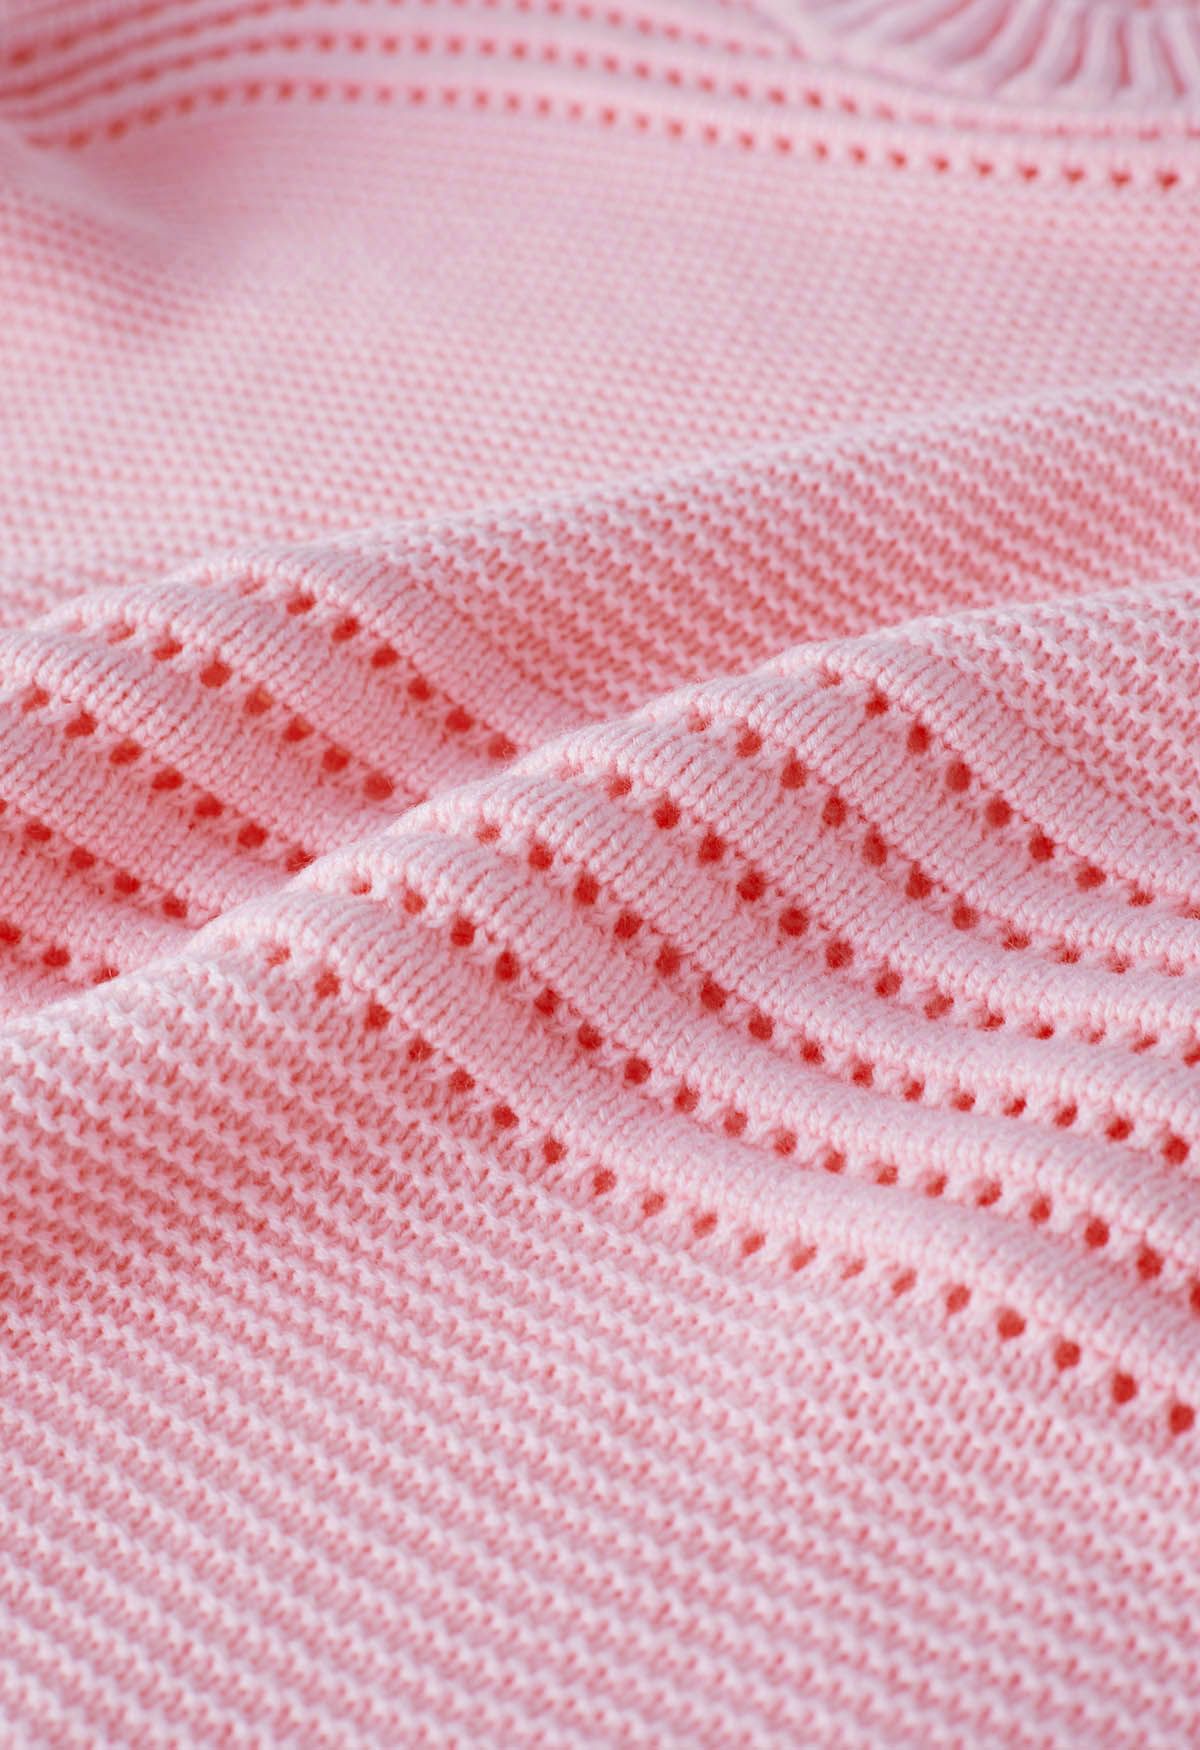 Stripe Embossed Openwork Knit Sweater in Pink